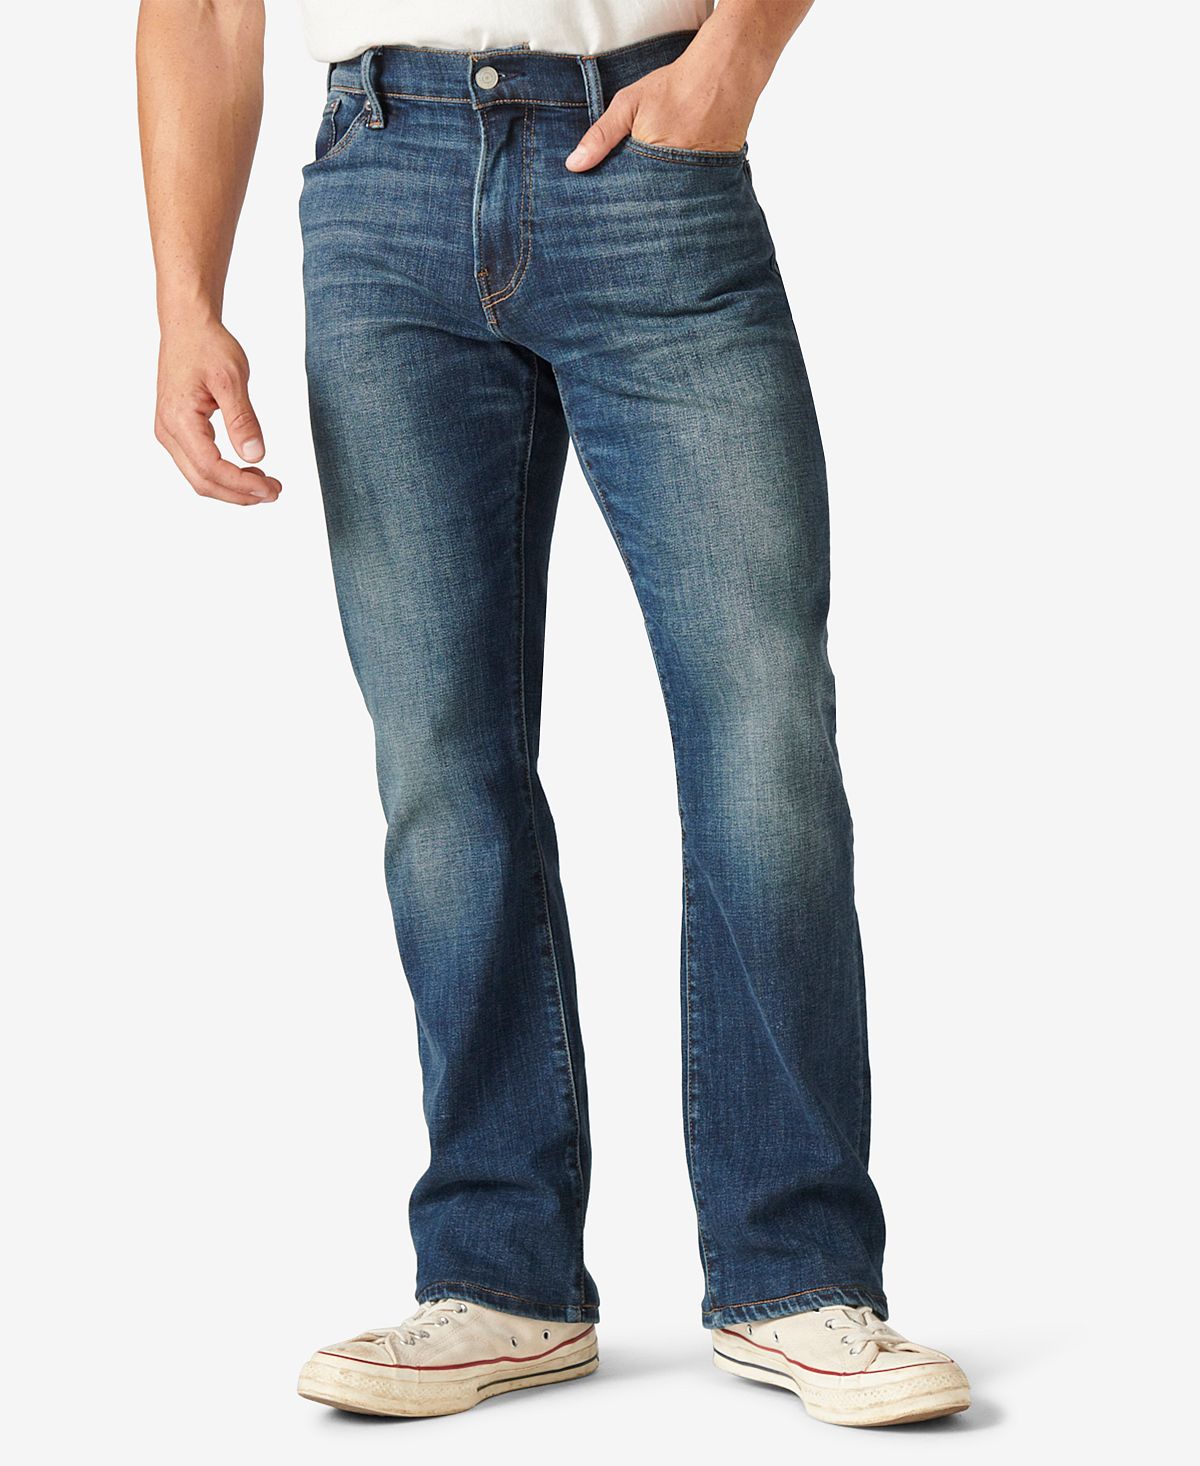 Мужские эластичные джинсы easy rider bootcut coolmax Lucky Brand